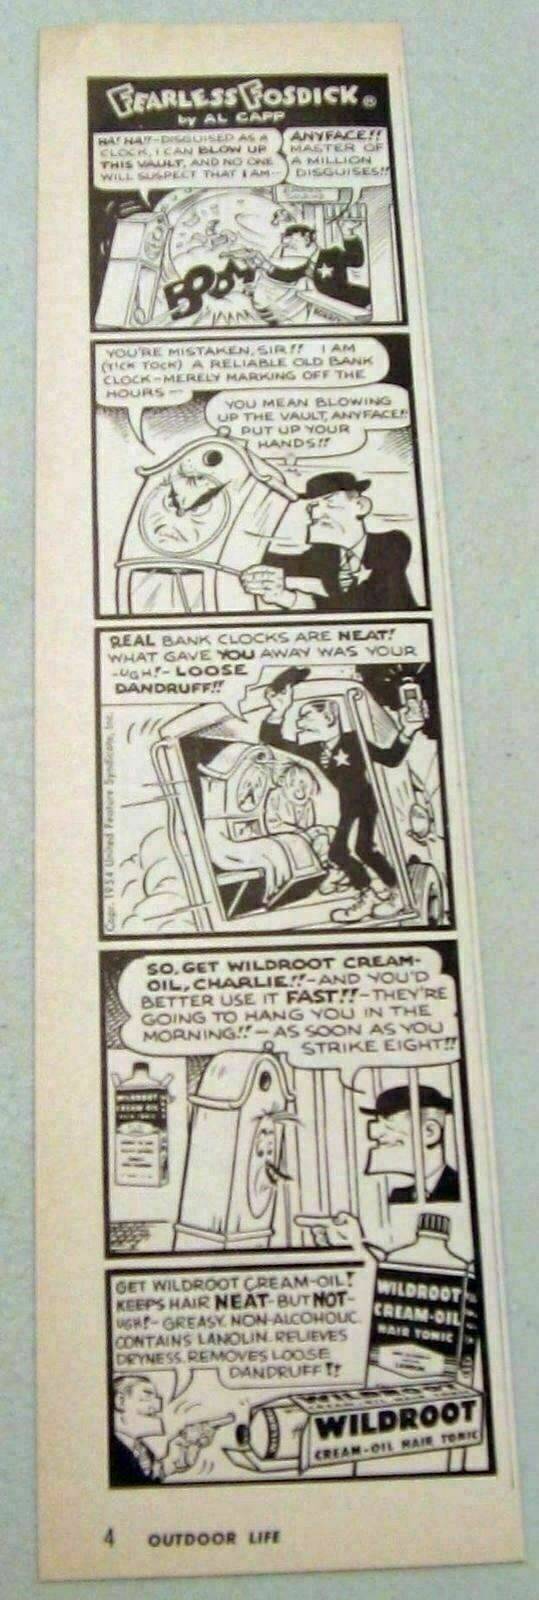 1954 Print Ad Wildroot Hair Tonic Fearless Fosdick Cartoon by Al Capp